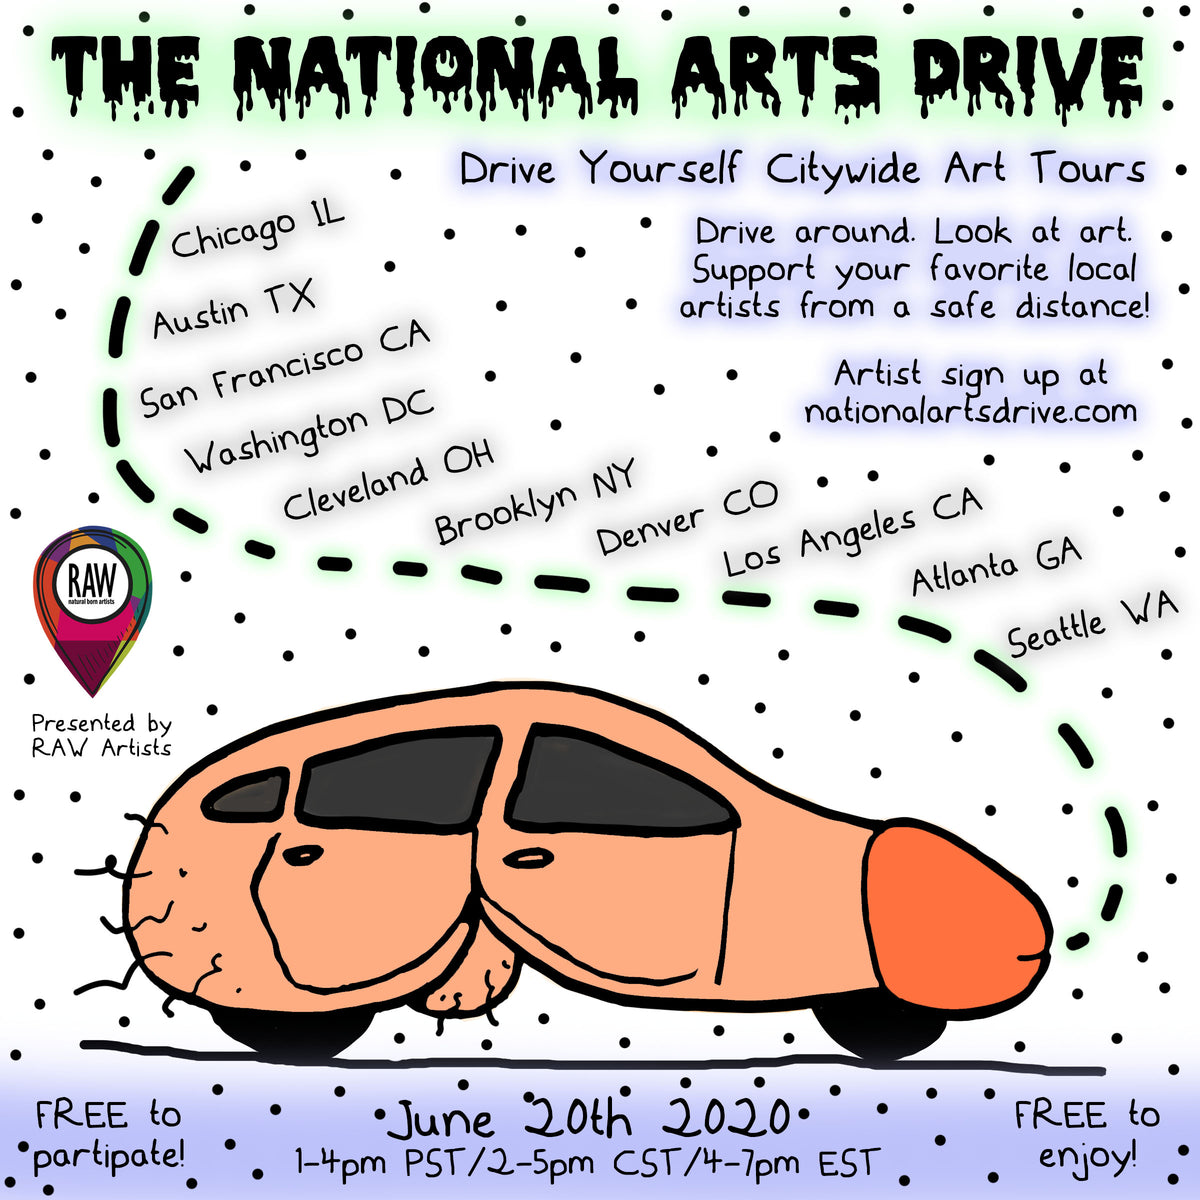 JUNE 20, 2020 // NATIONAL ARTS DRIVE